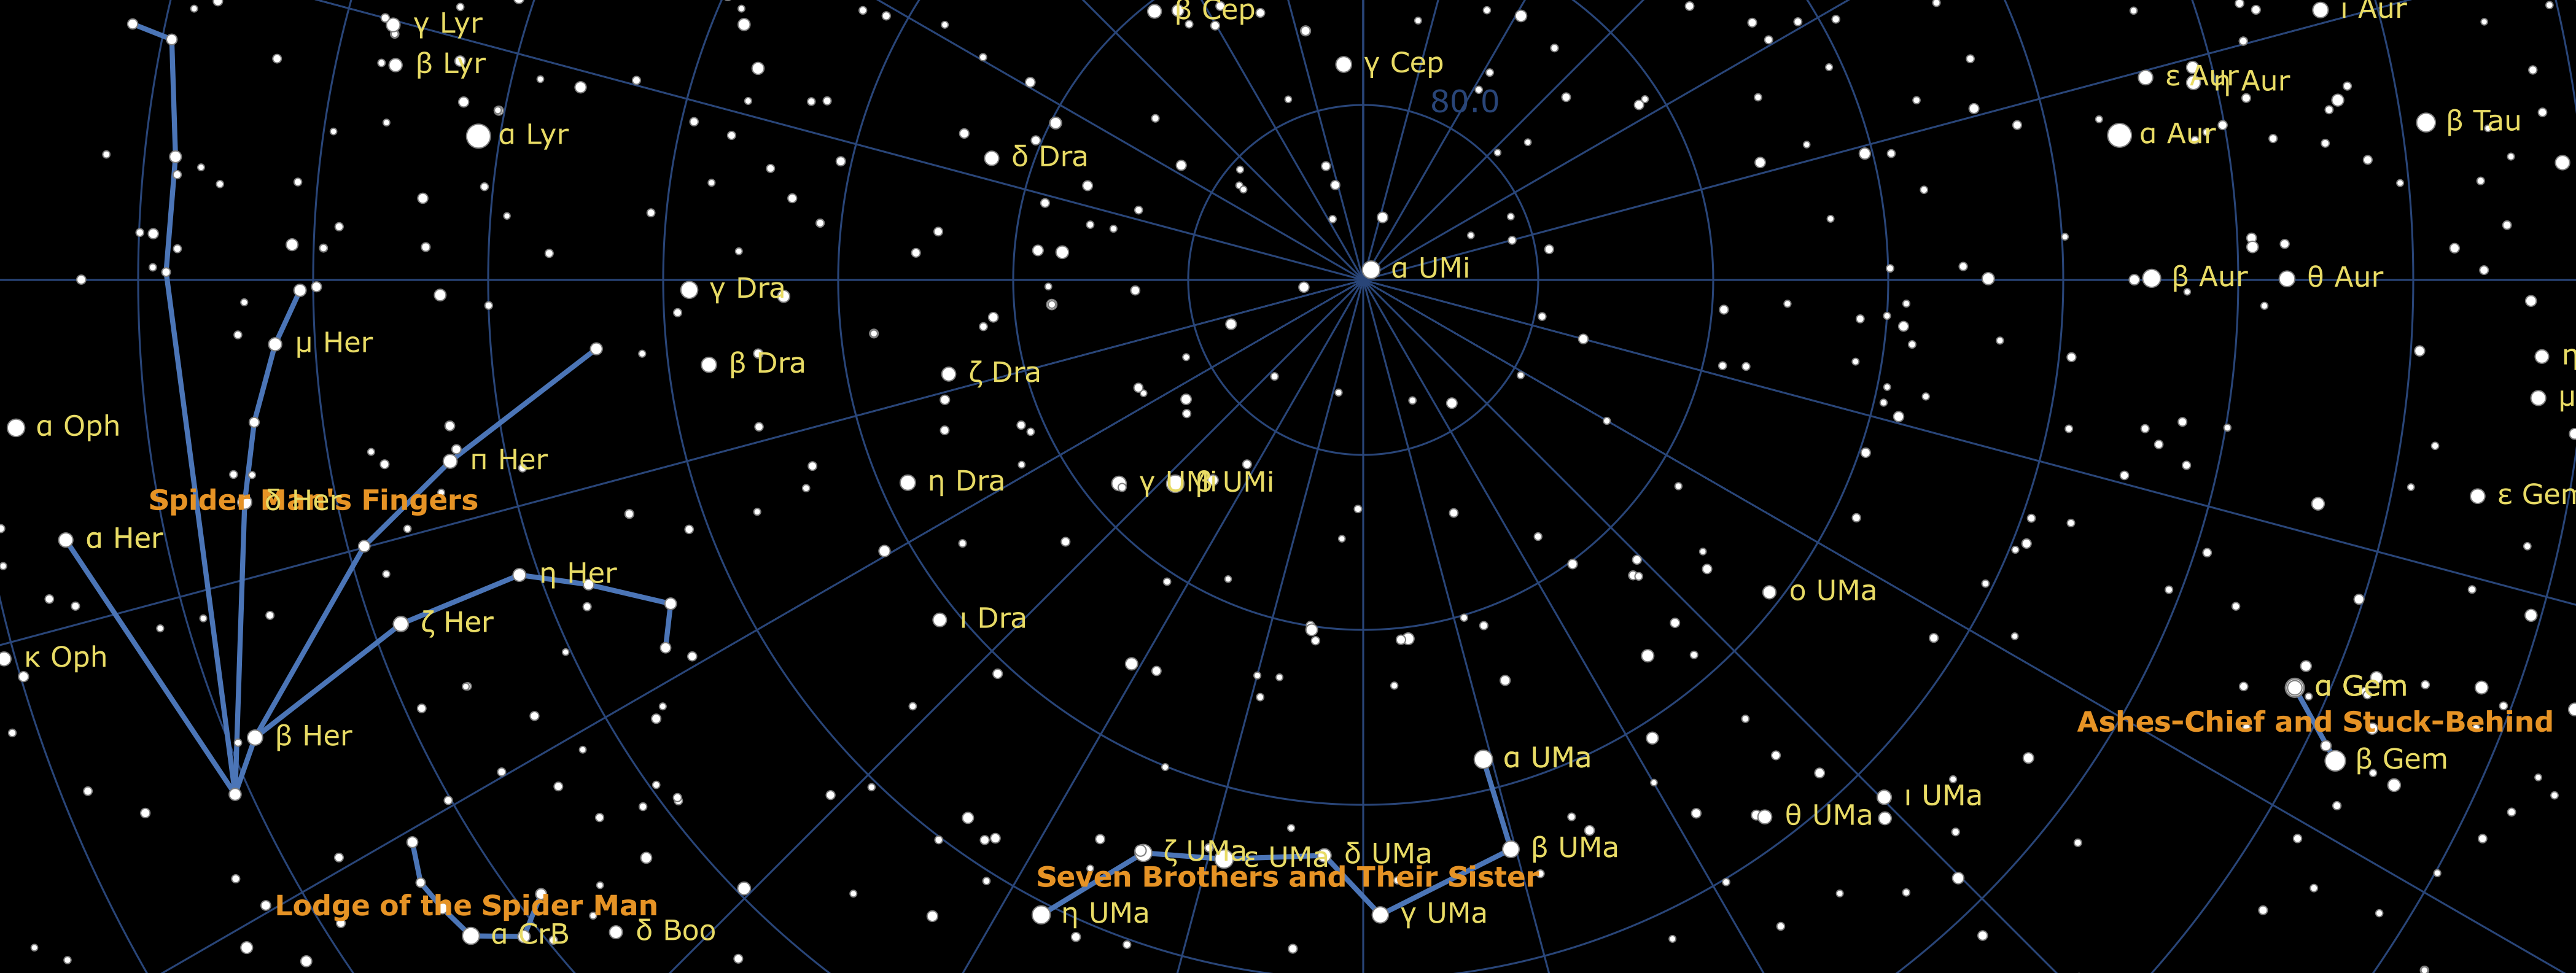 Blackfoot constellations around the North celestial pole